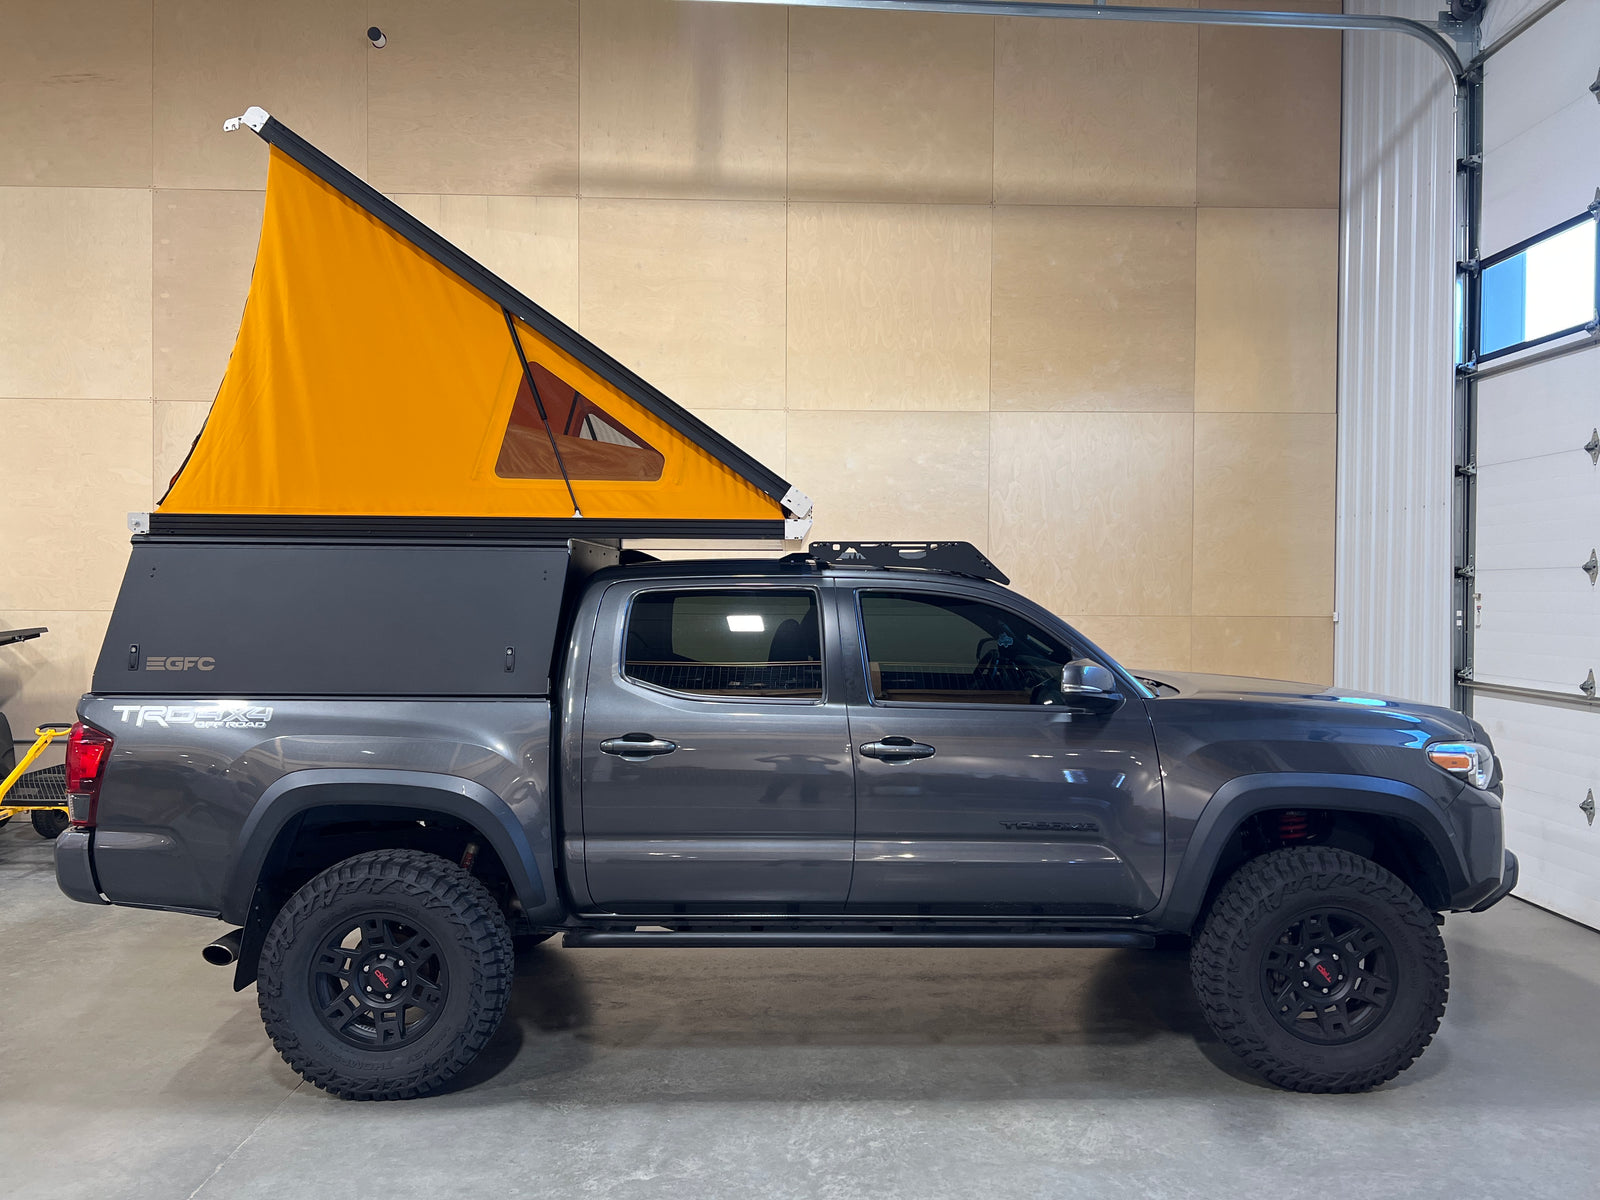 2021 Toyota Tacoma Camper - Build #5405 - GoFastCampers